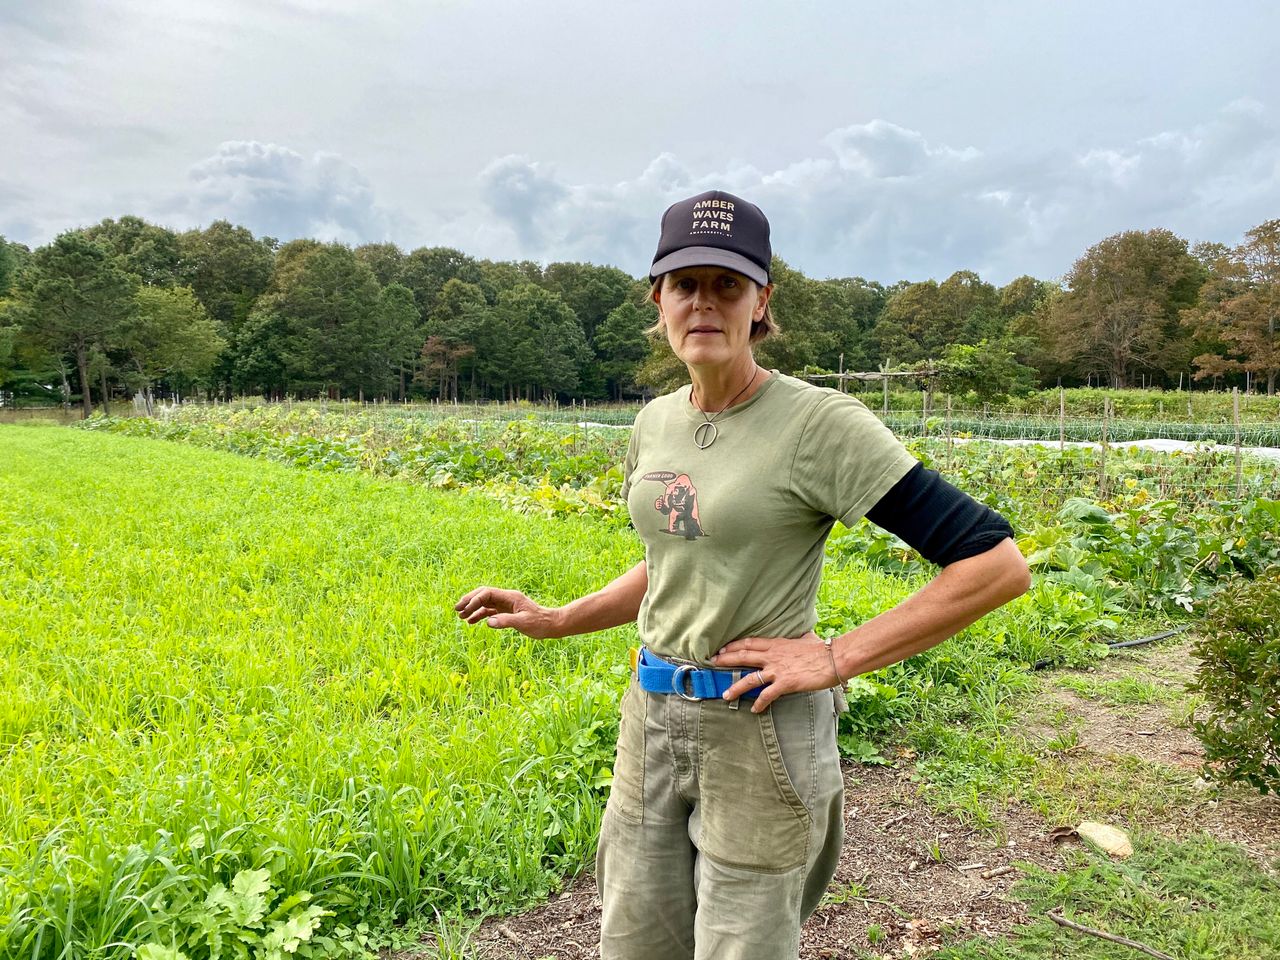 Patty Gentry transformed two acres of trash-strewn dirt on Long Island into a profitable organic farm by betting big on regenerative farming.